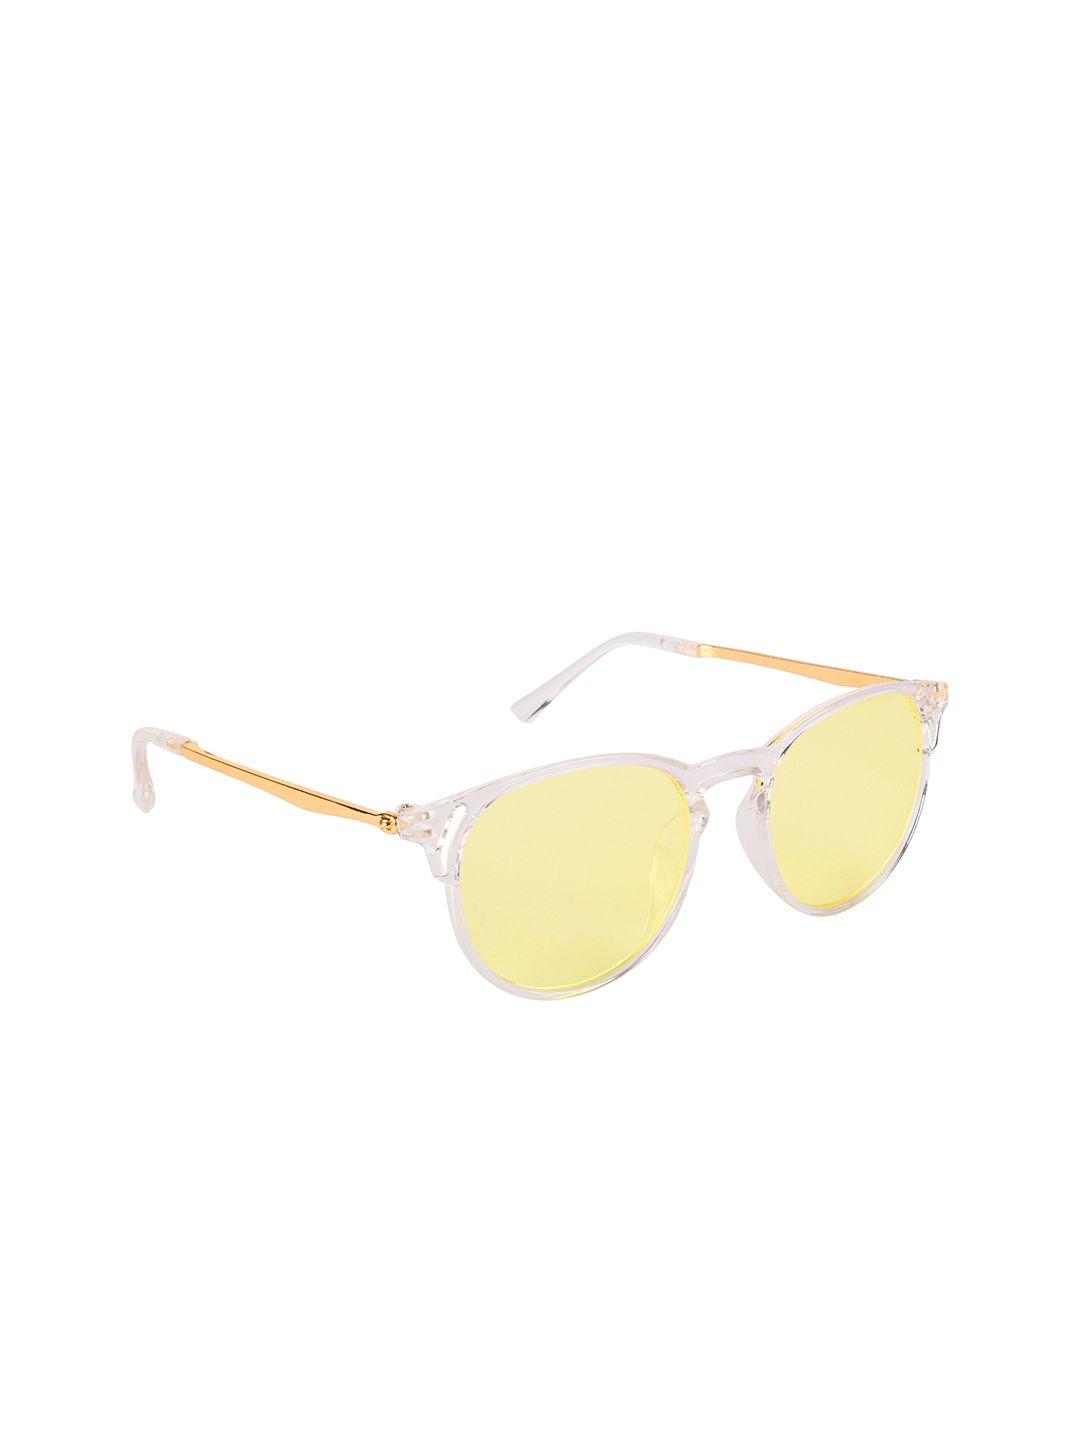 nuvew unisex yellow lens & gold-toned wayfarer sunglasses - 16186-29-nw-25252-yellow